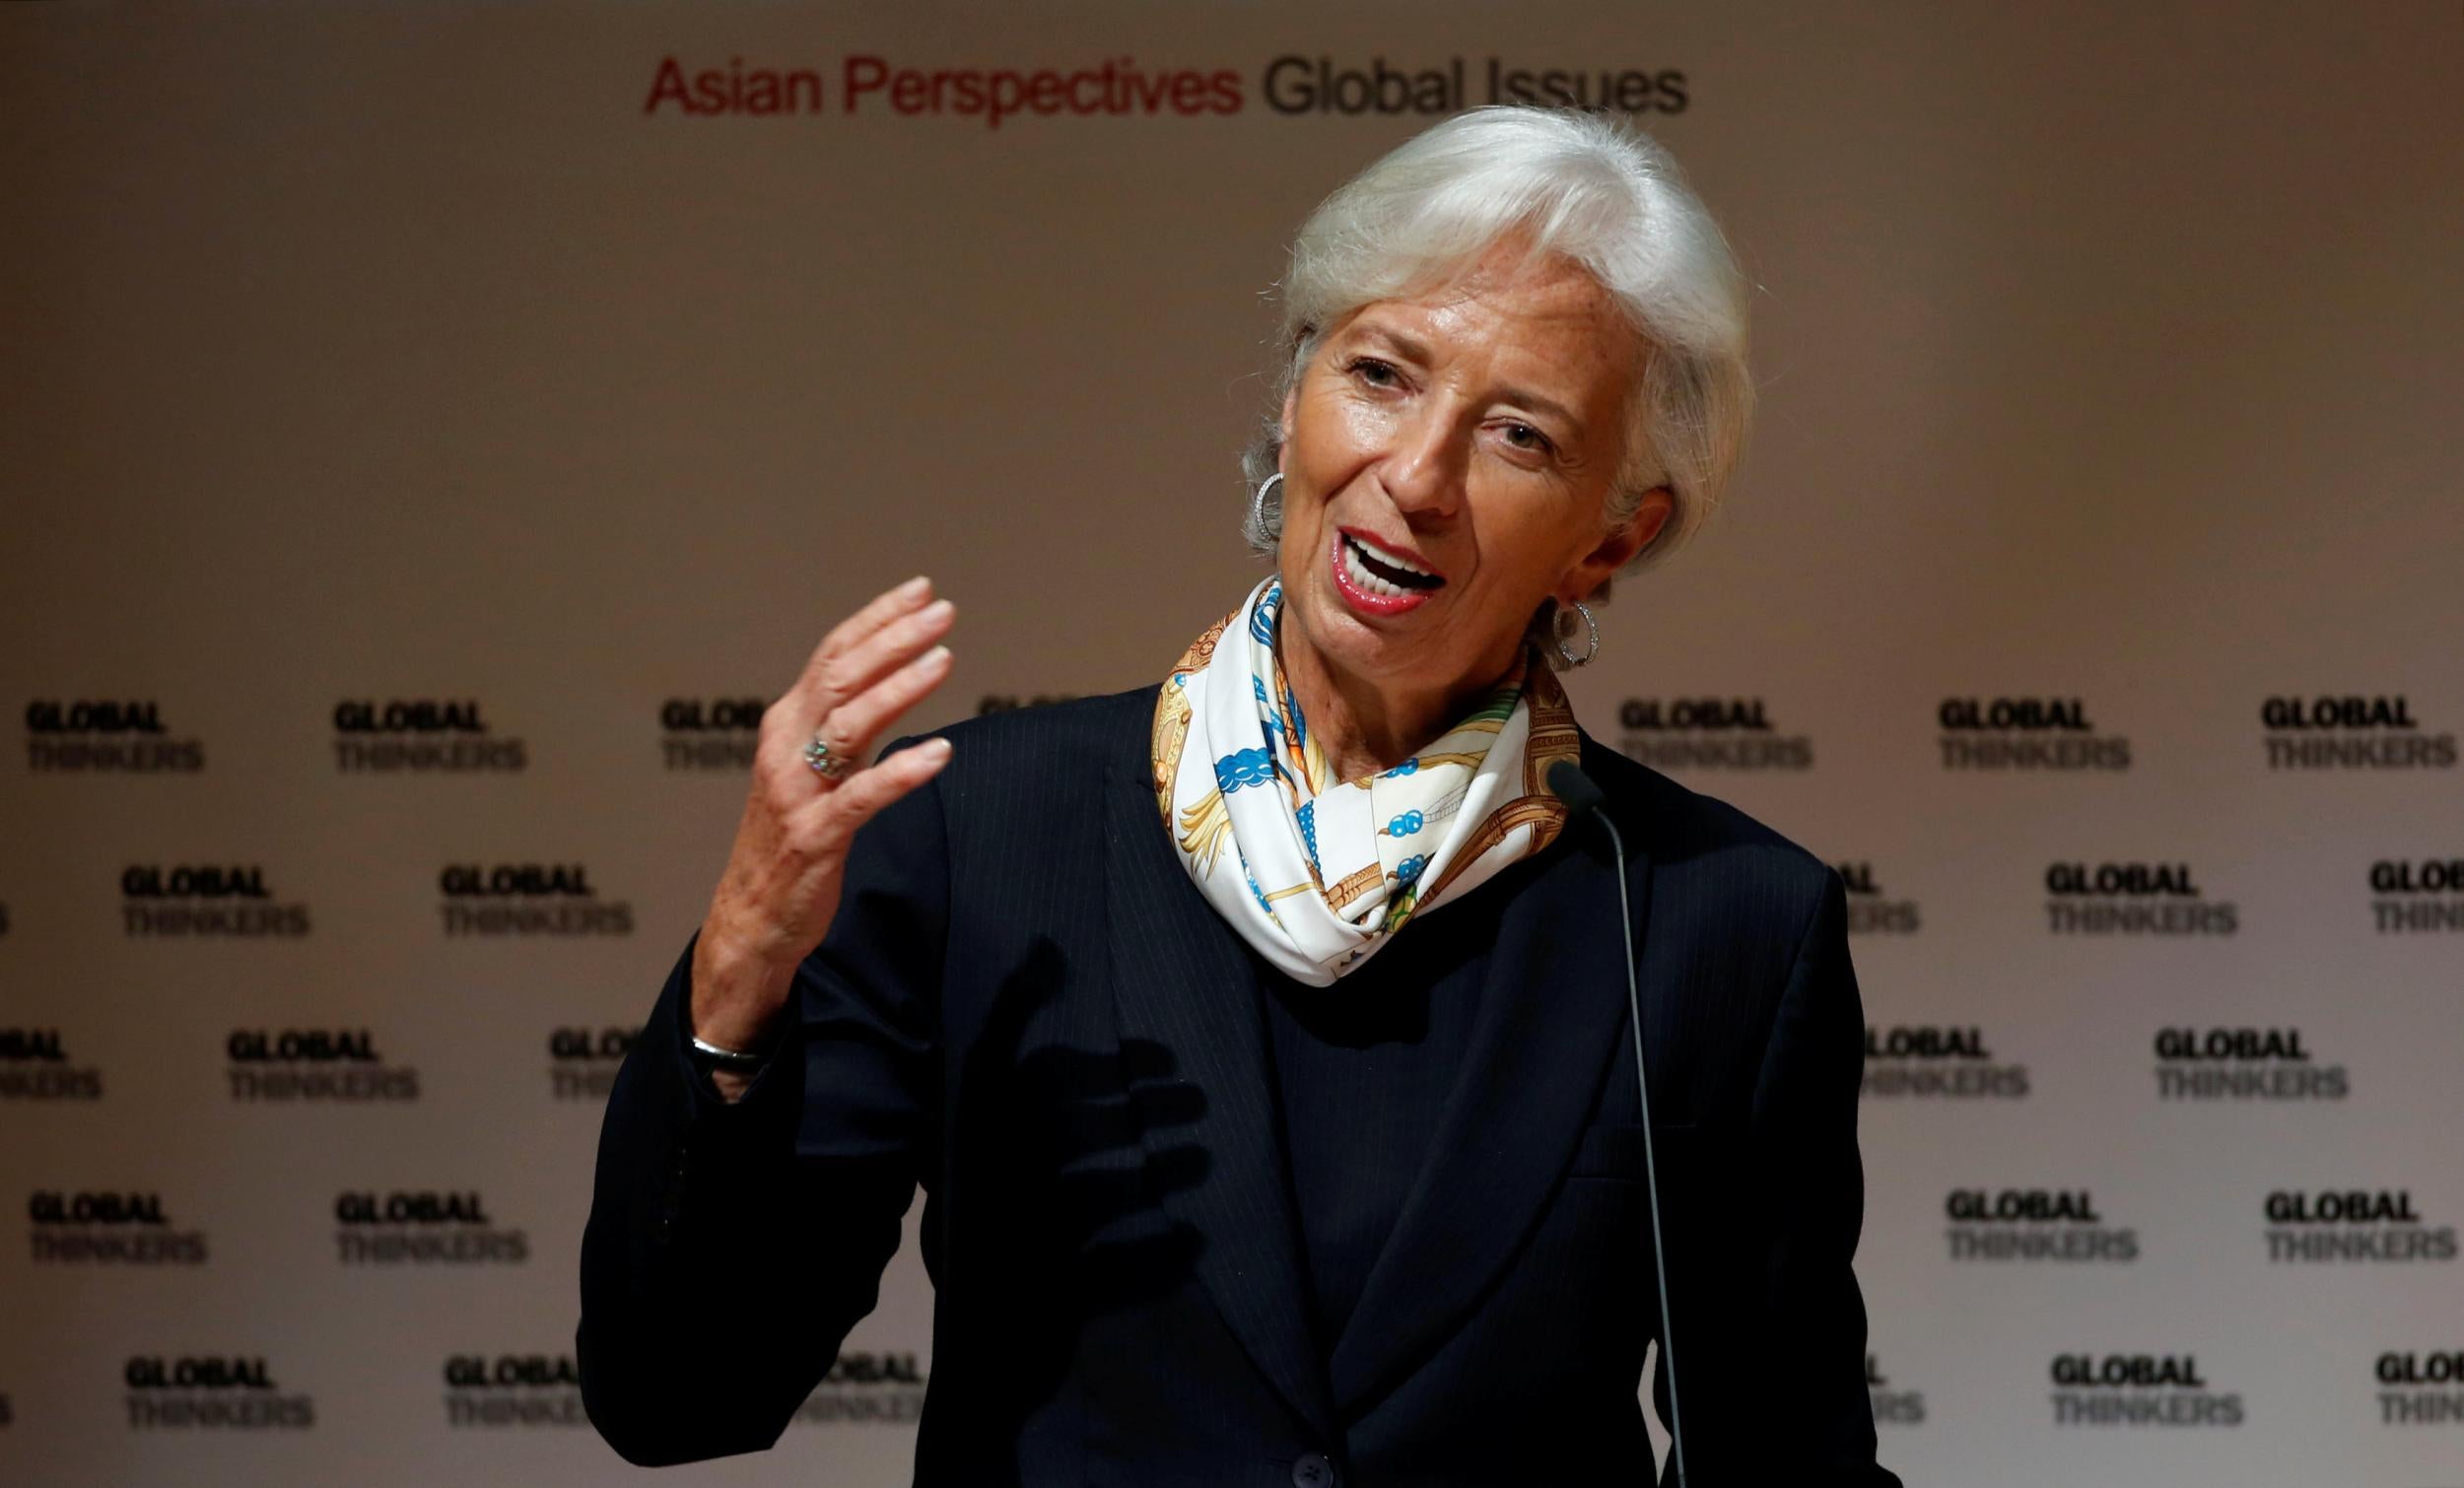 Christine Lagarde warns global leaders on the use of threats